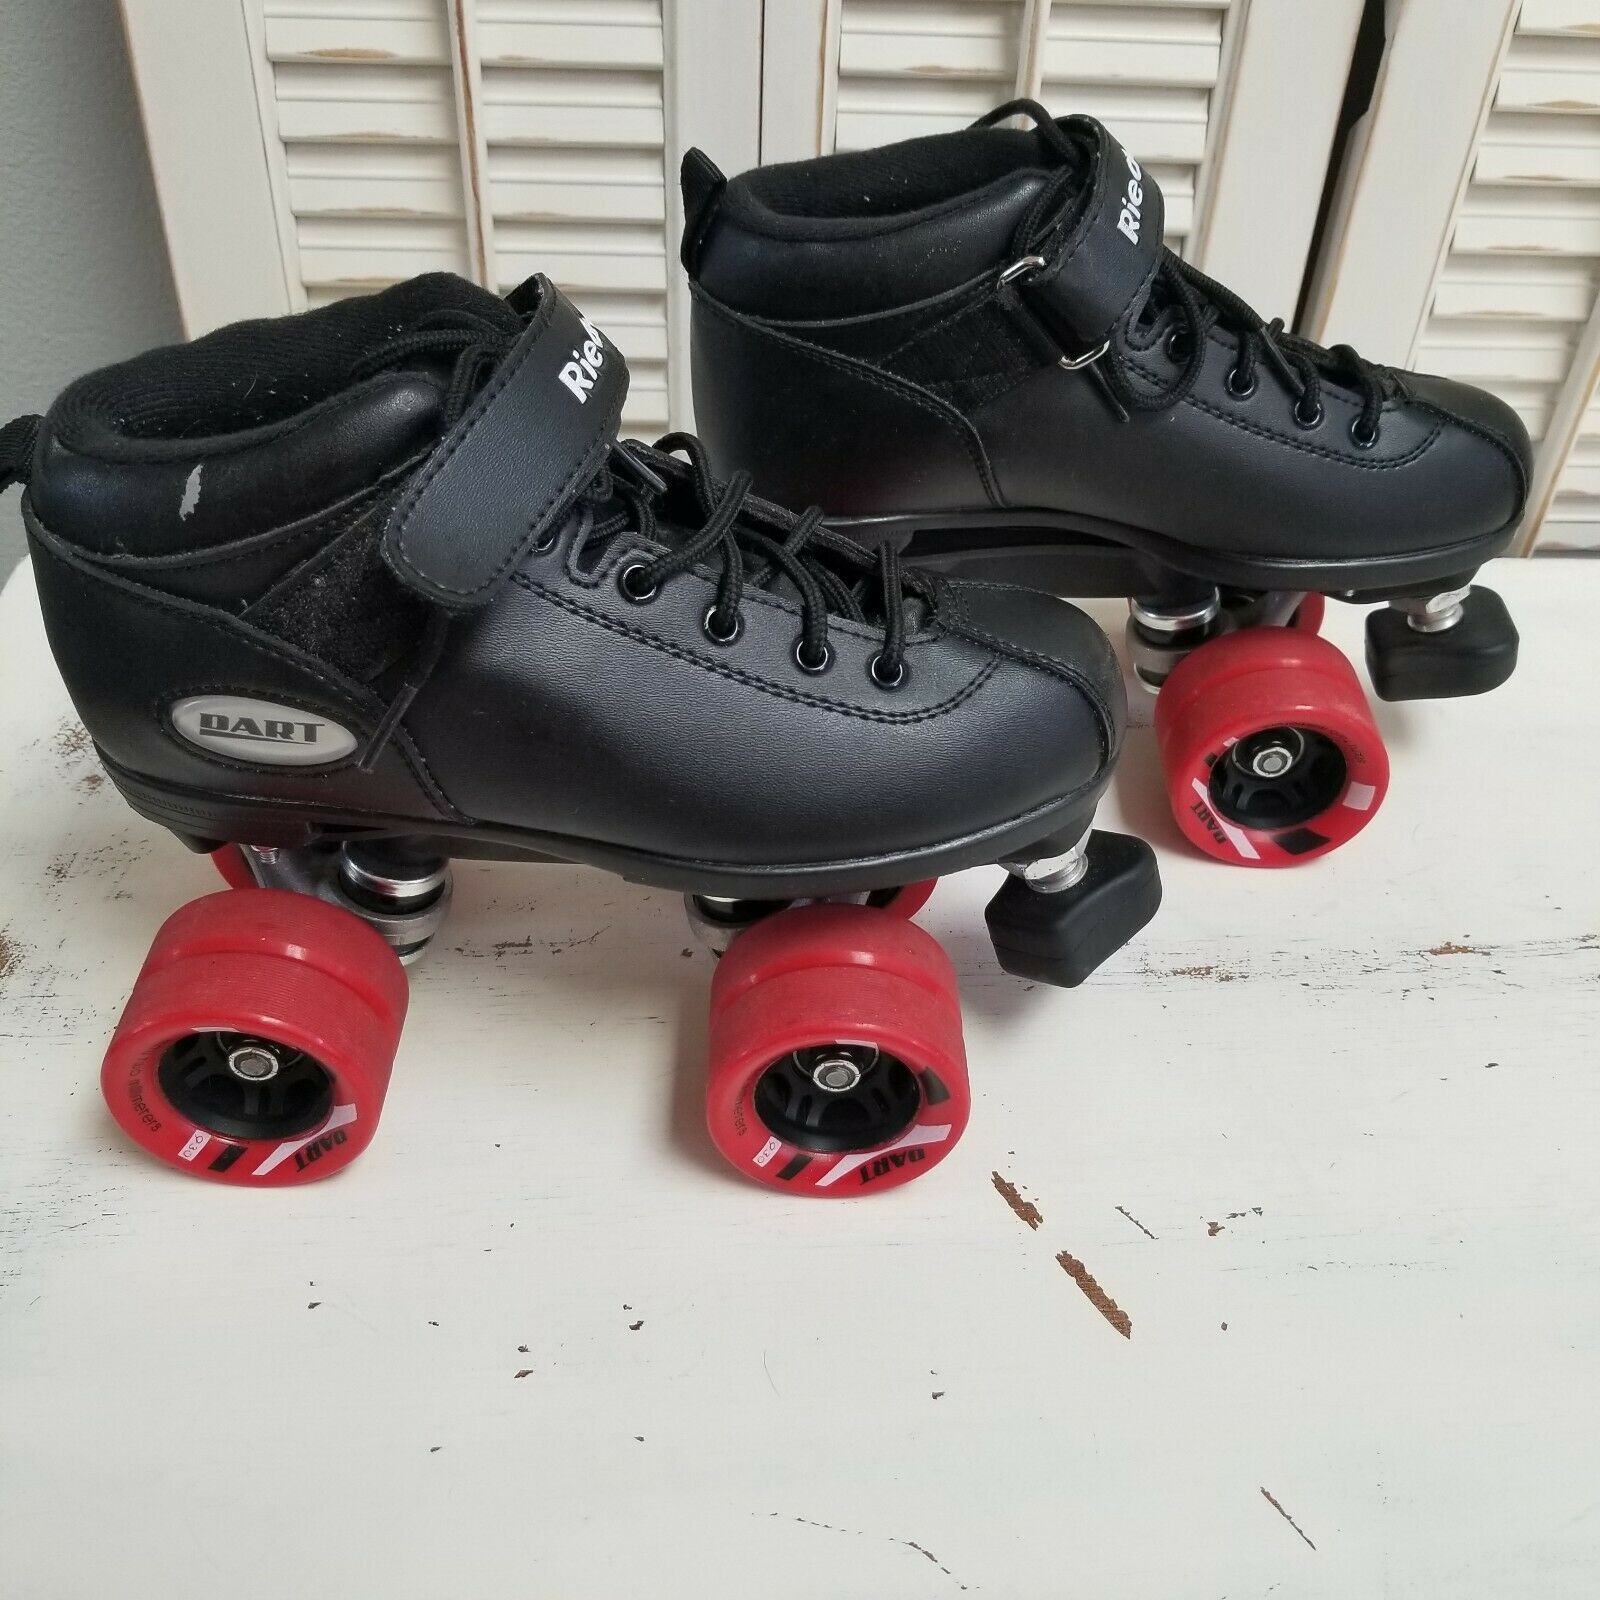 Riedell Dart Roller Skates Black Size 4 Youth Unisex